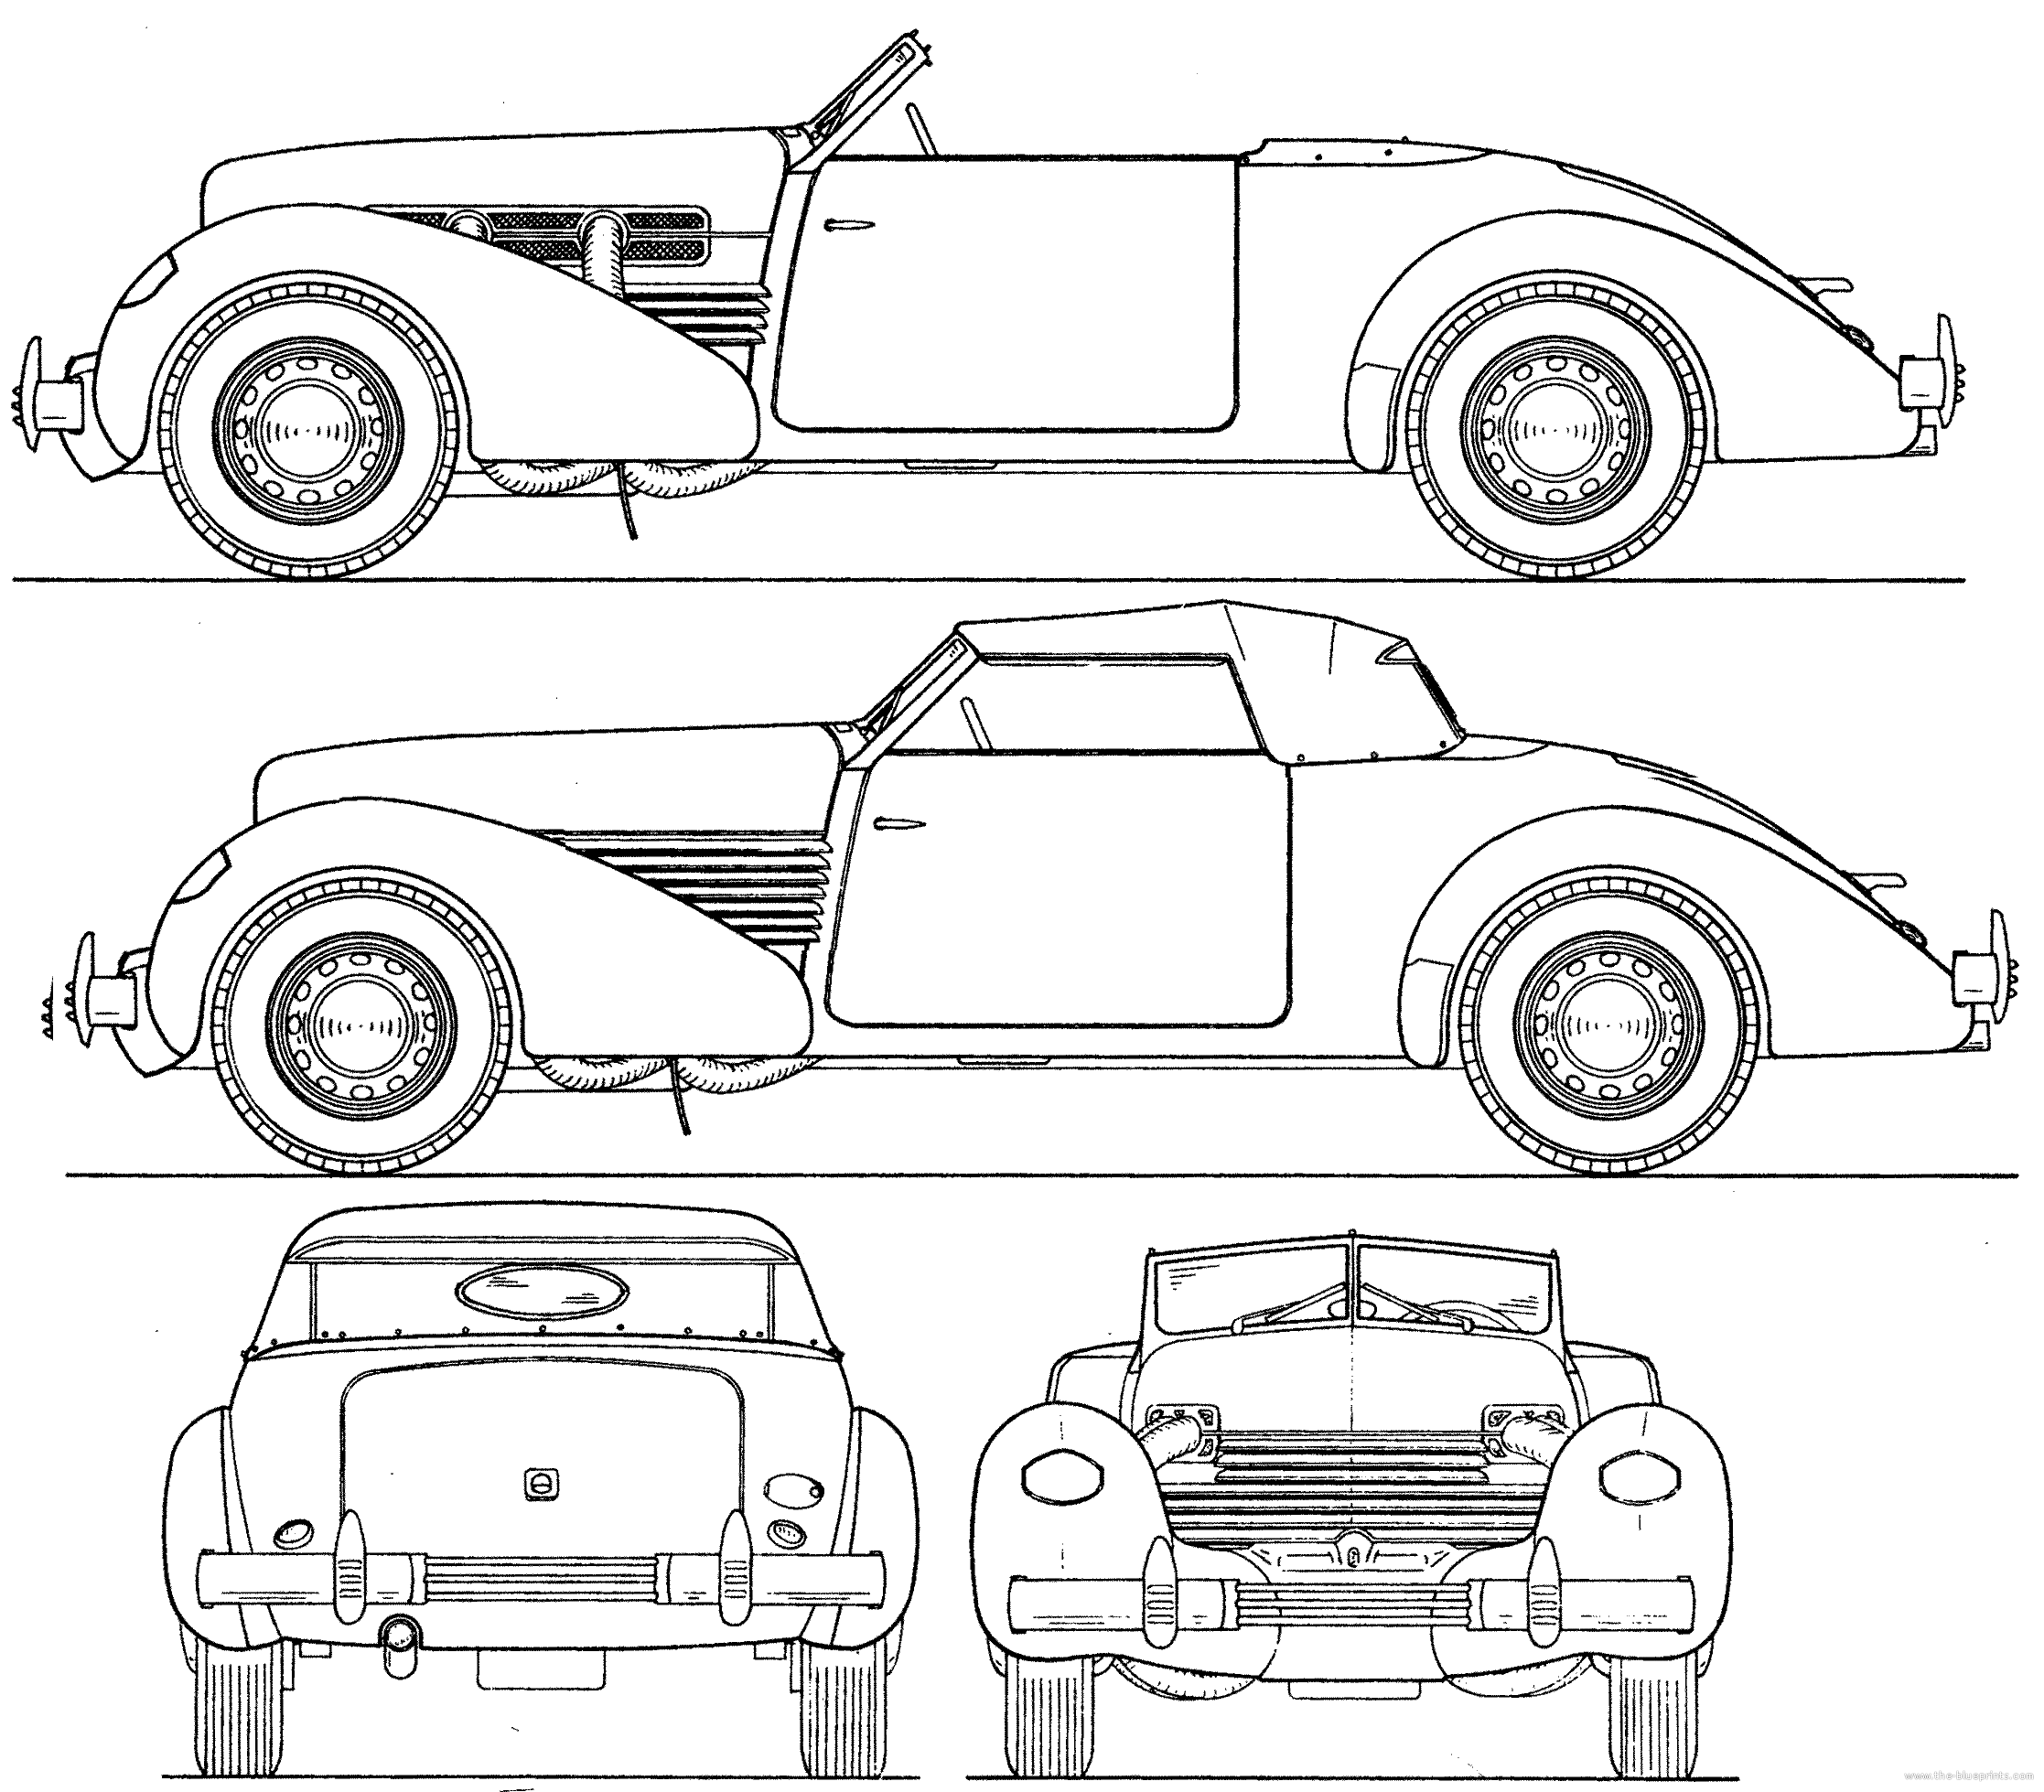 The-Blueprints.com - Blueprints > Cars > Various Cars > Cord 812 ...